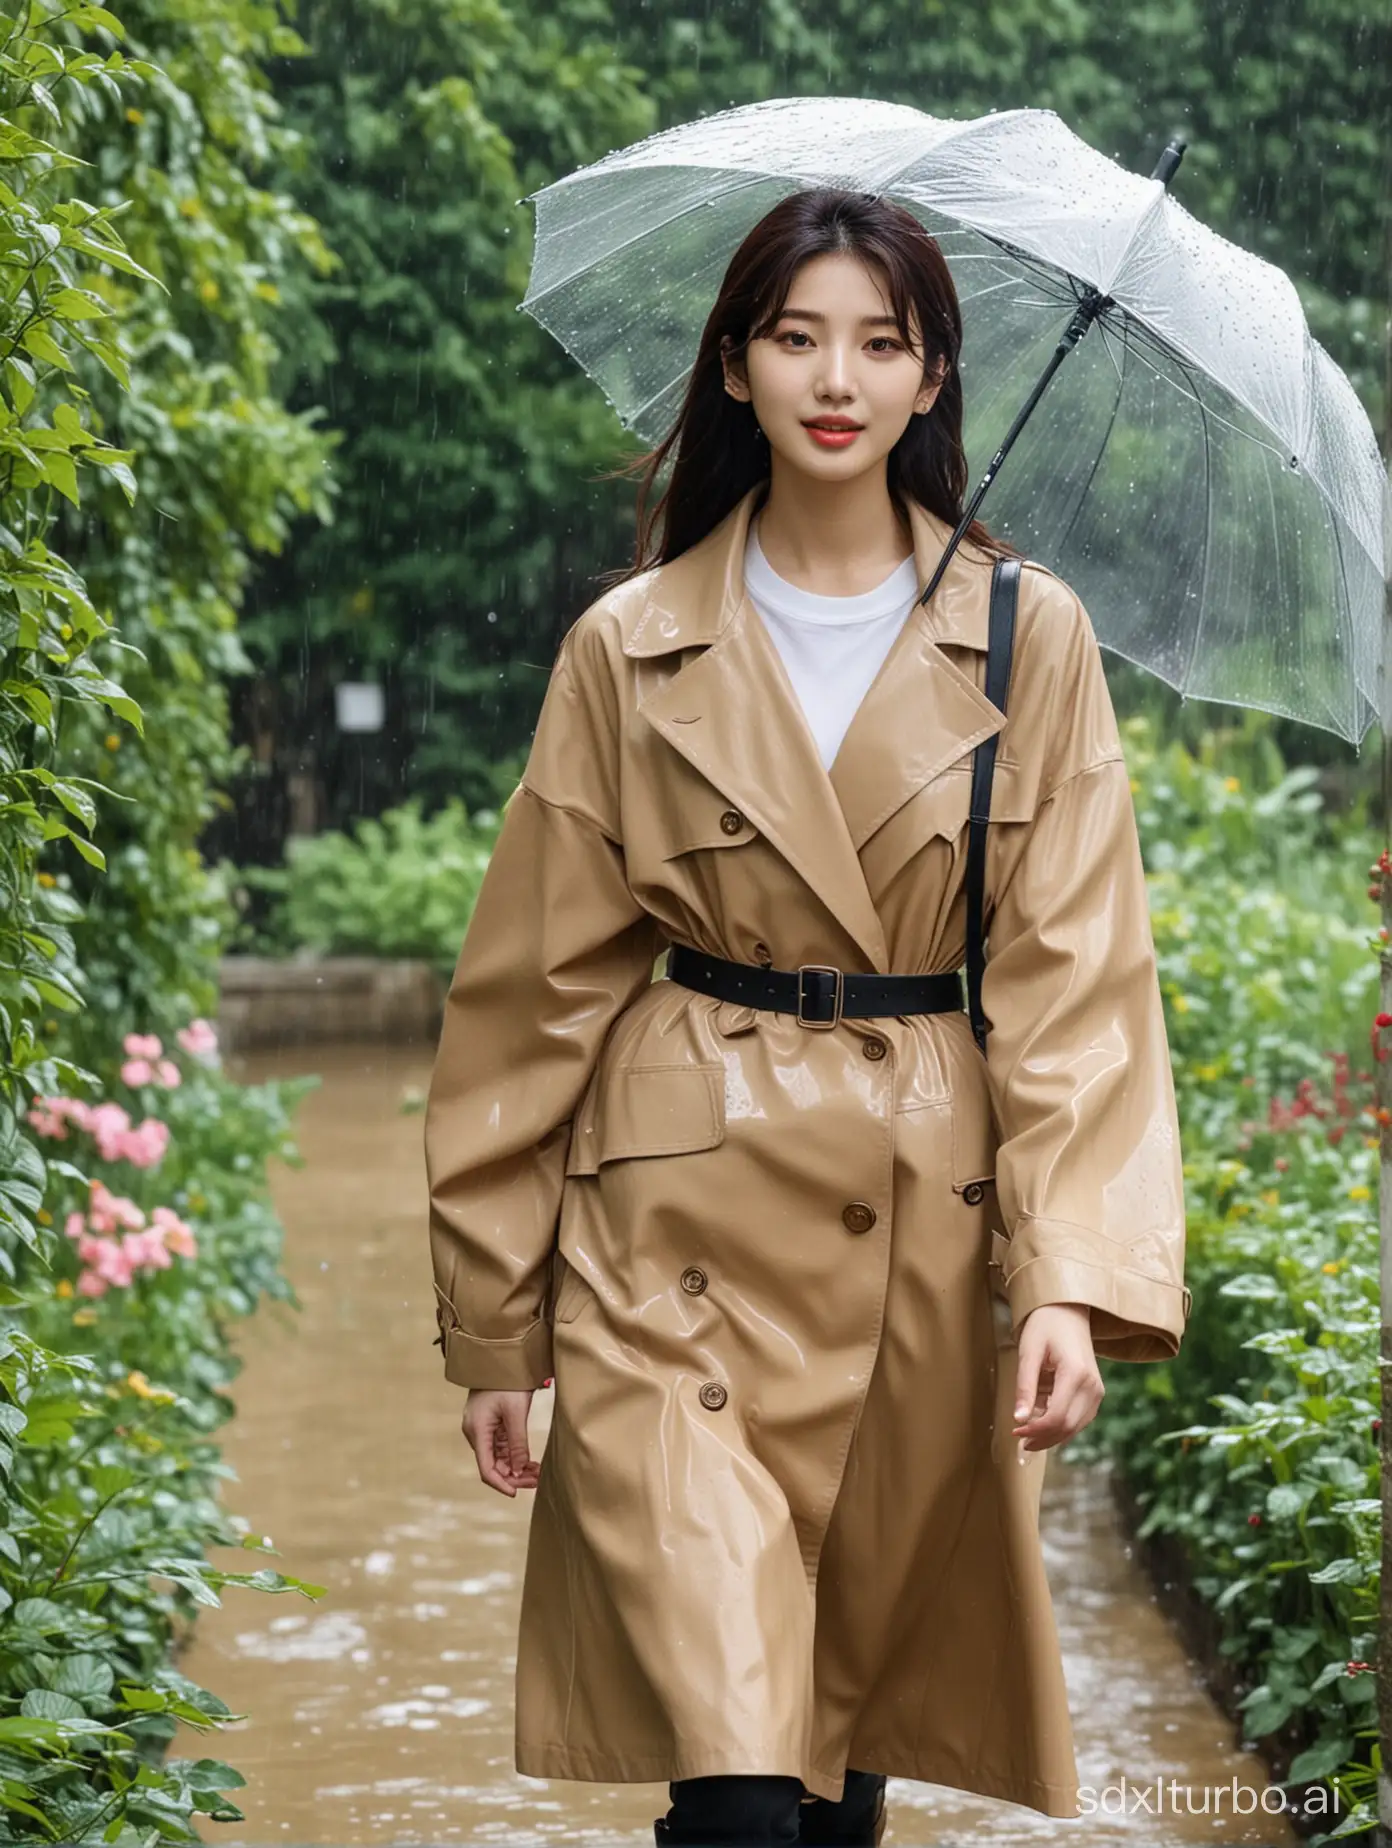 Beautiful Bae Suzy walking in garden on a rainy day